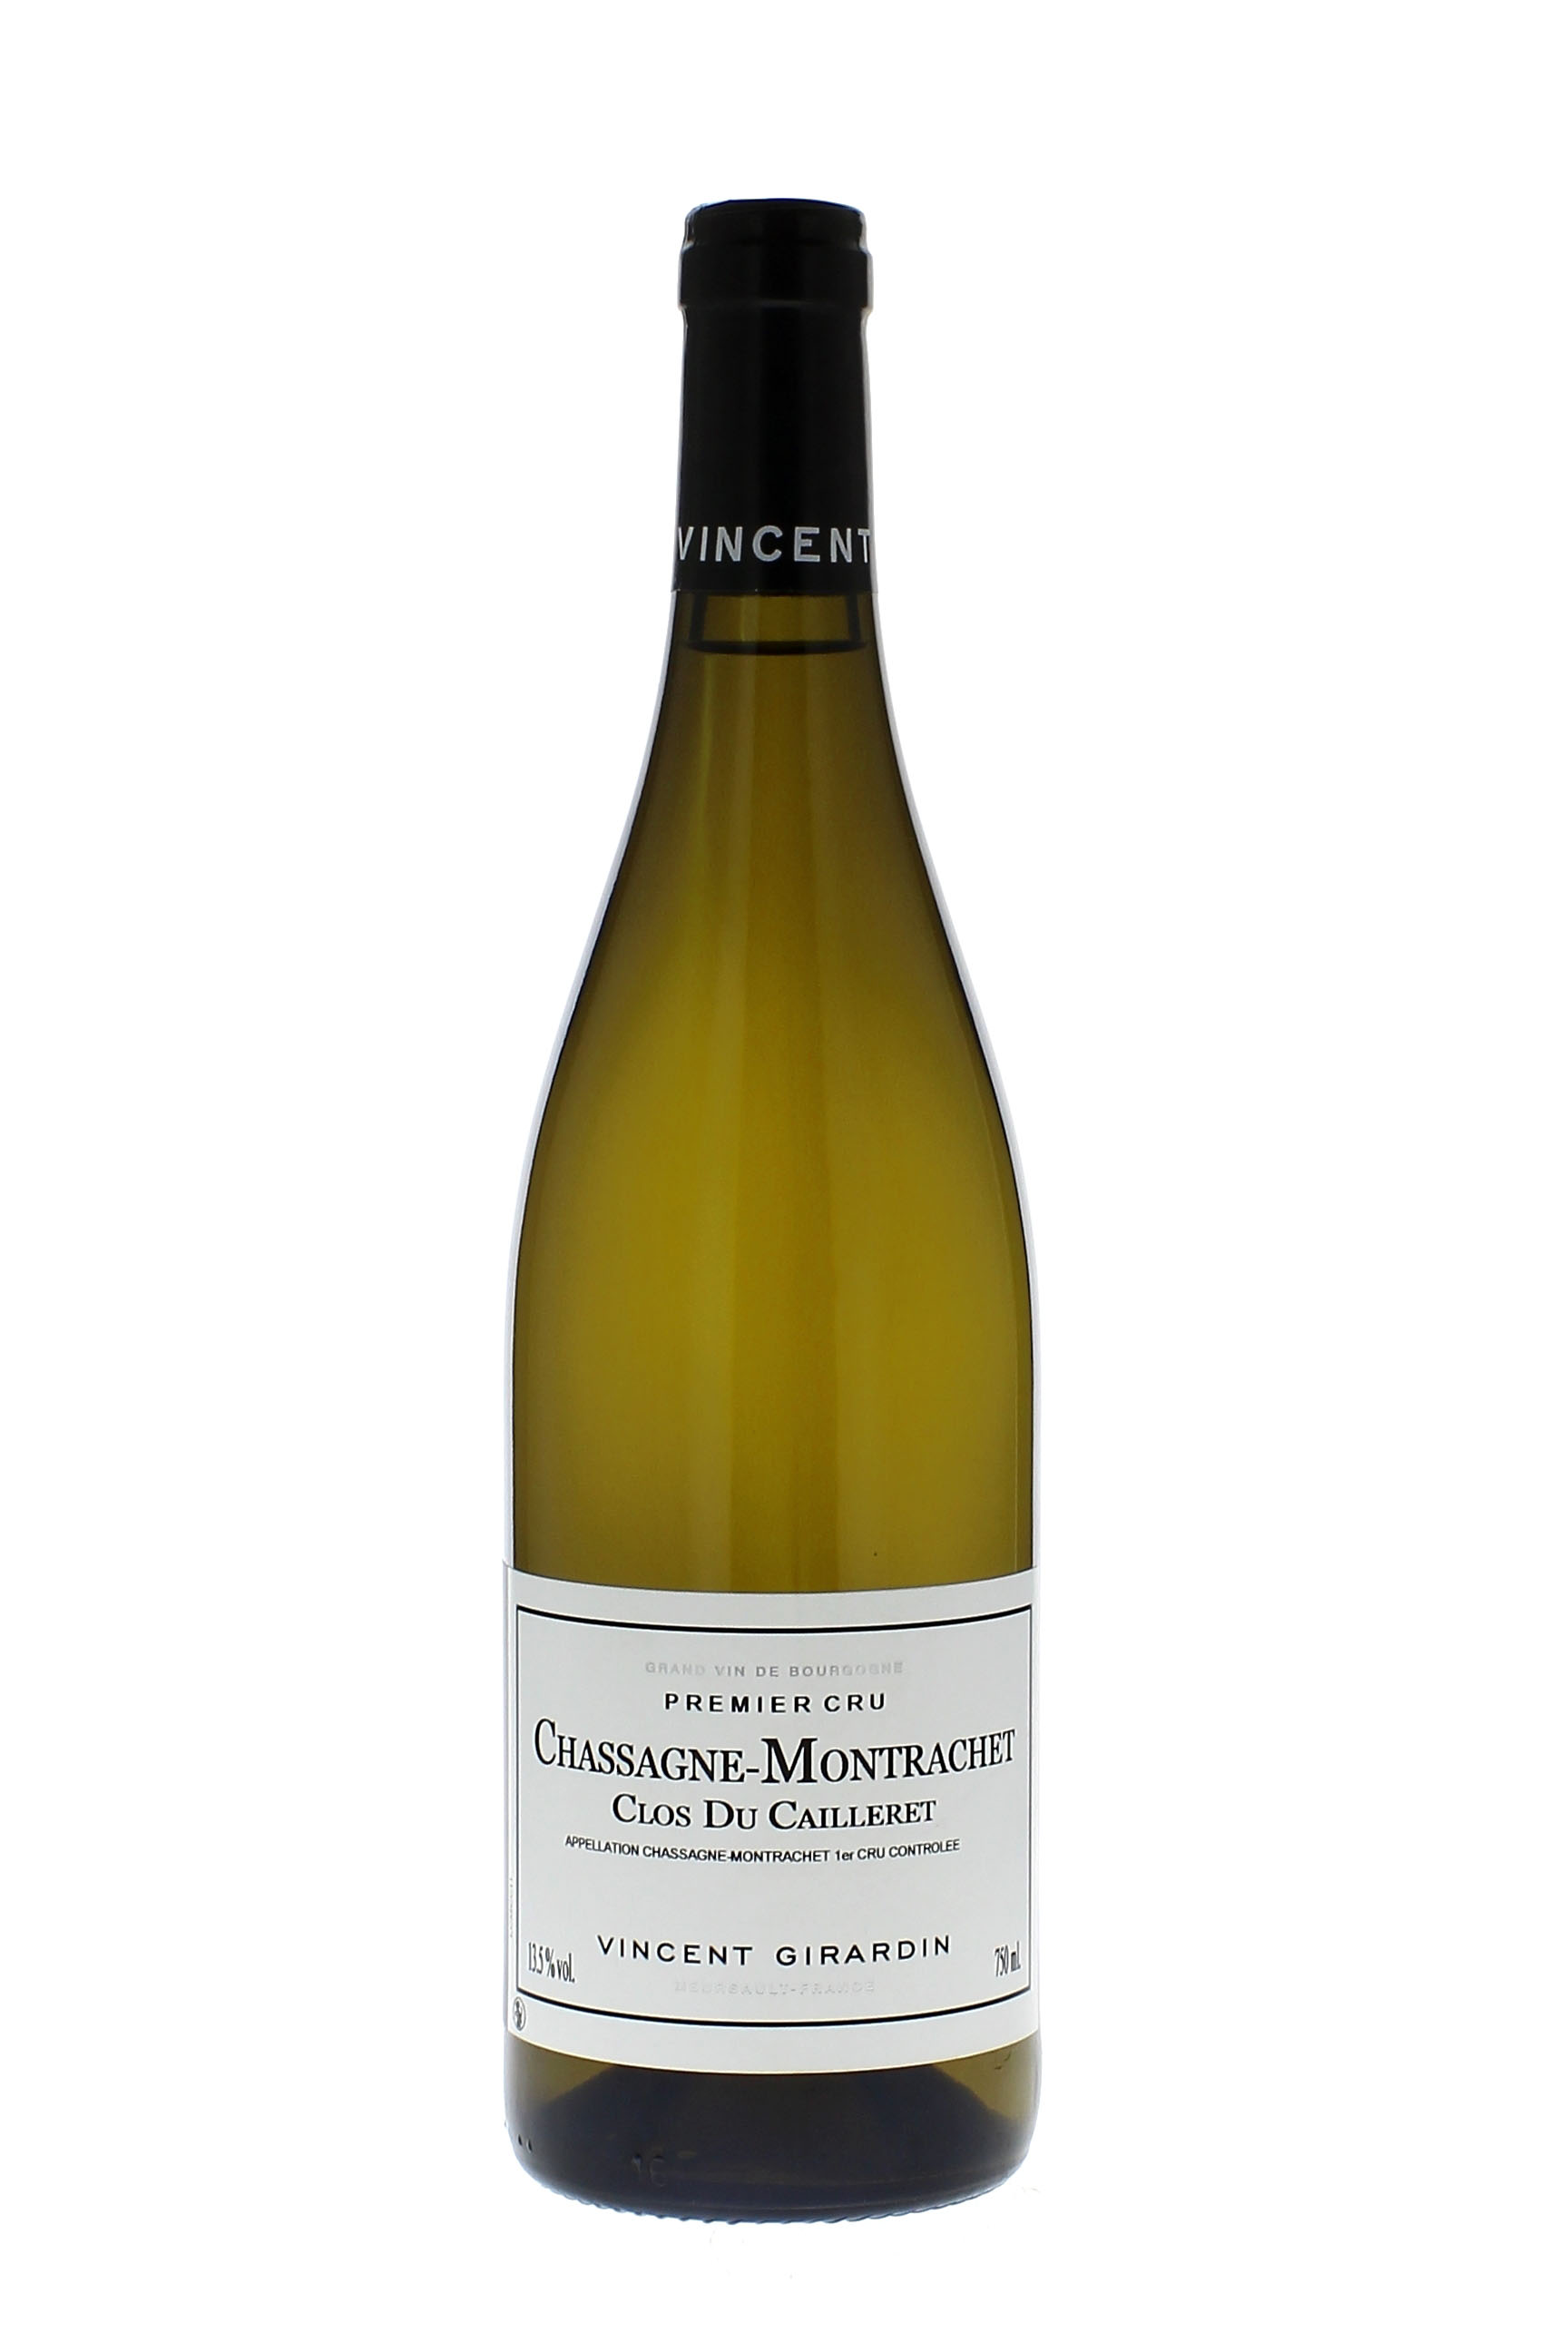 Chassagne montrachet 1er cru le cailleret 2015 Domaine GIRARDIN Vincent, Bourgogne blanc